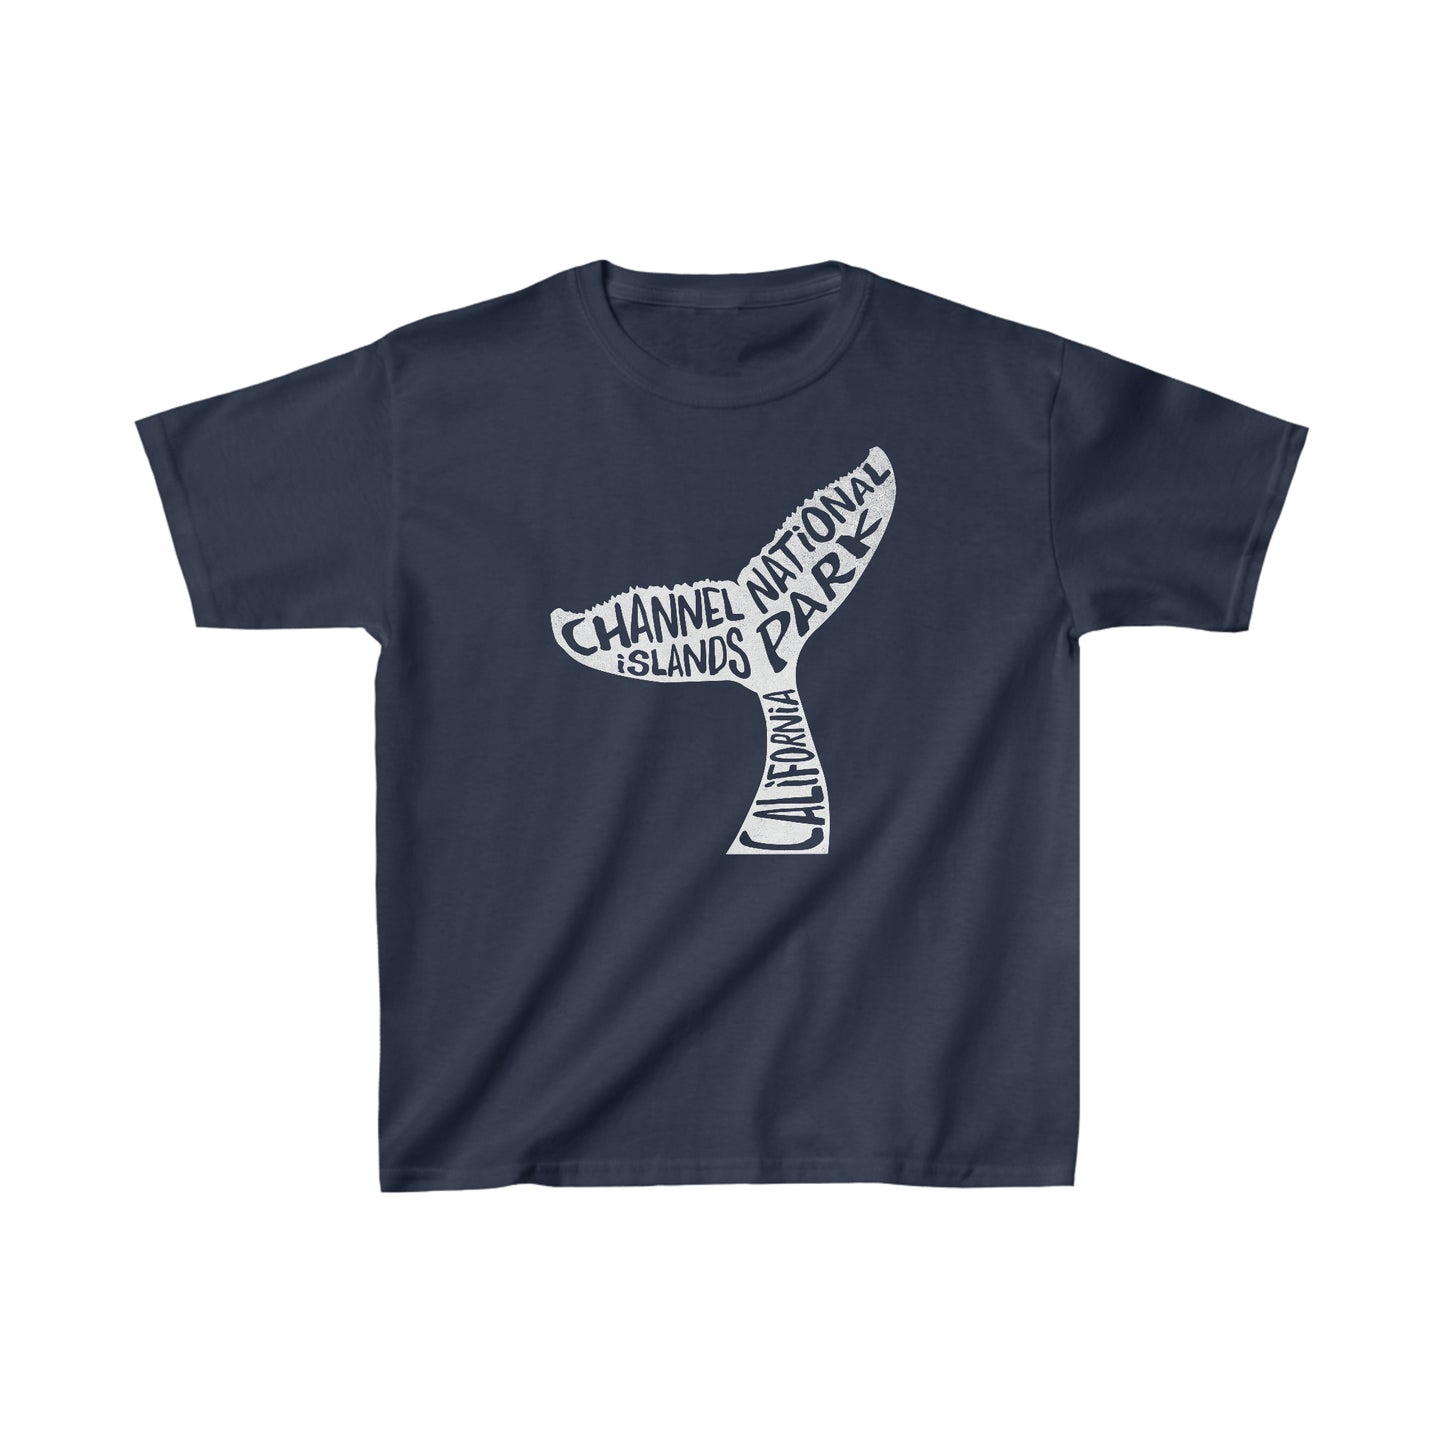 Channel Islands National Park Child T-Shirt - Whale Tale